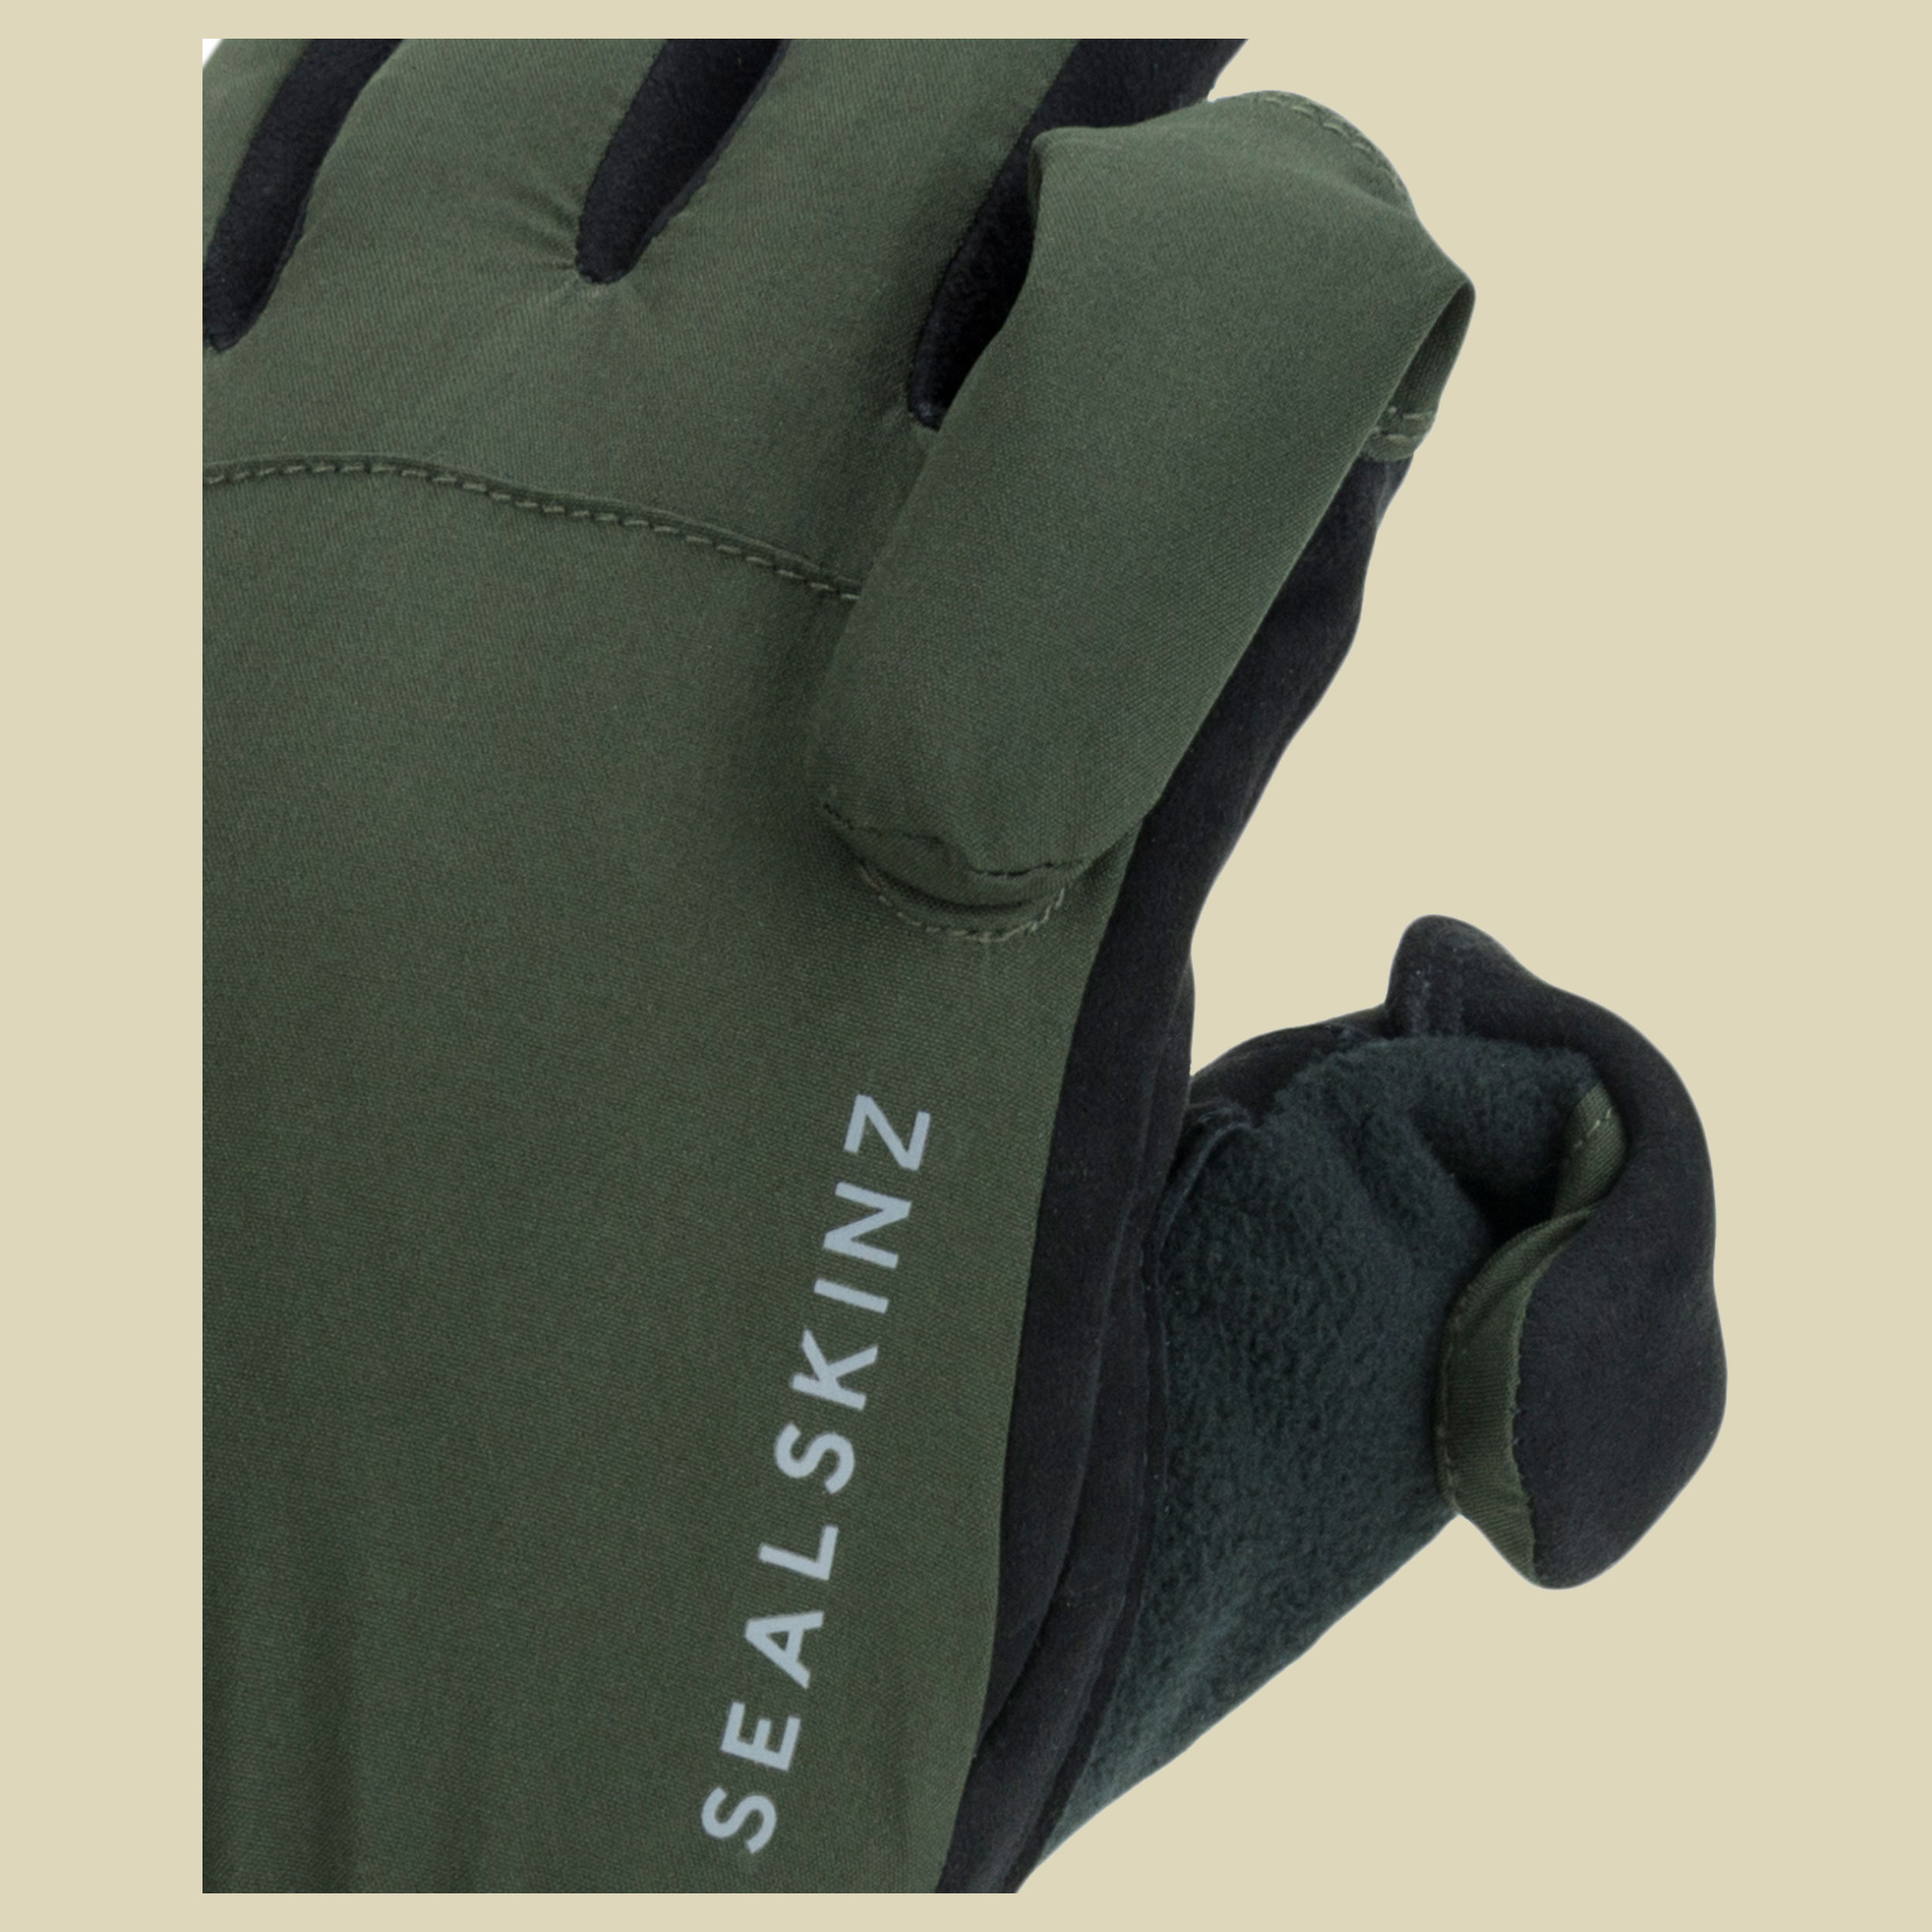 Waterproof All Weather Sporting Glove Größe XL Farbe olive green/black